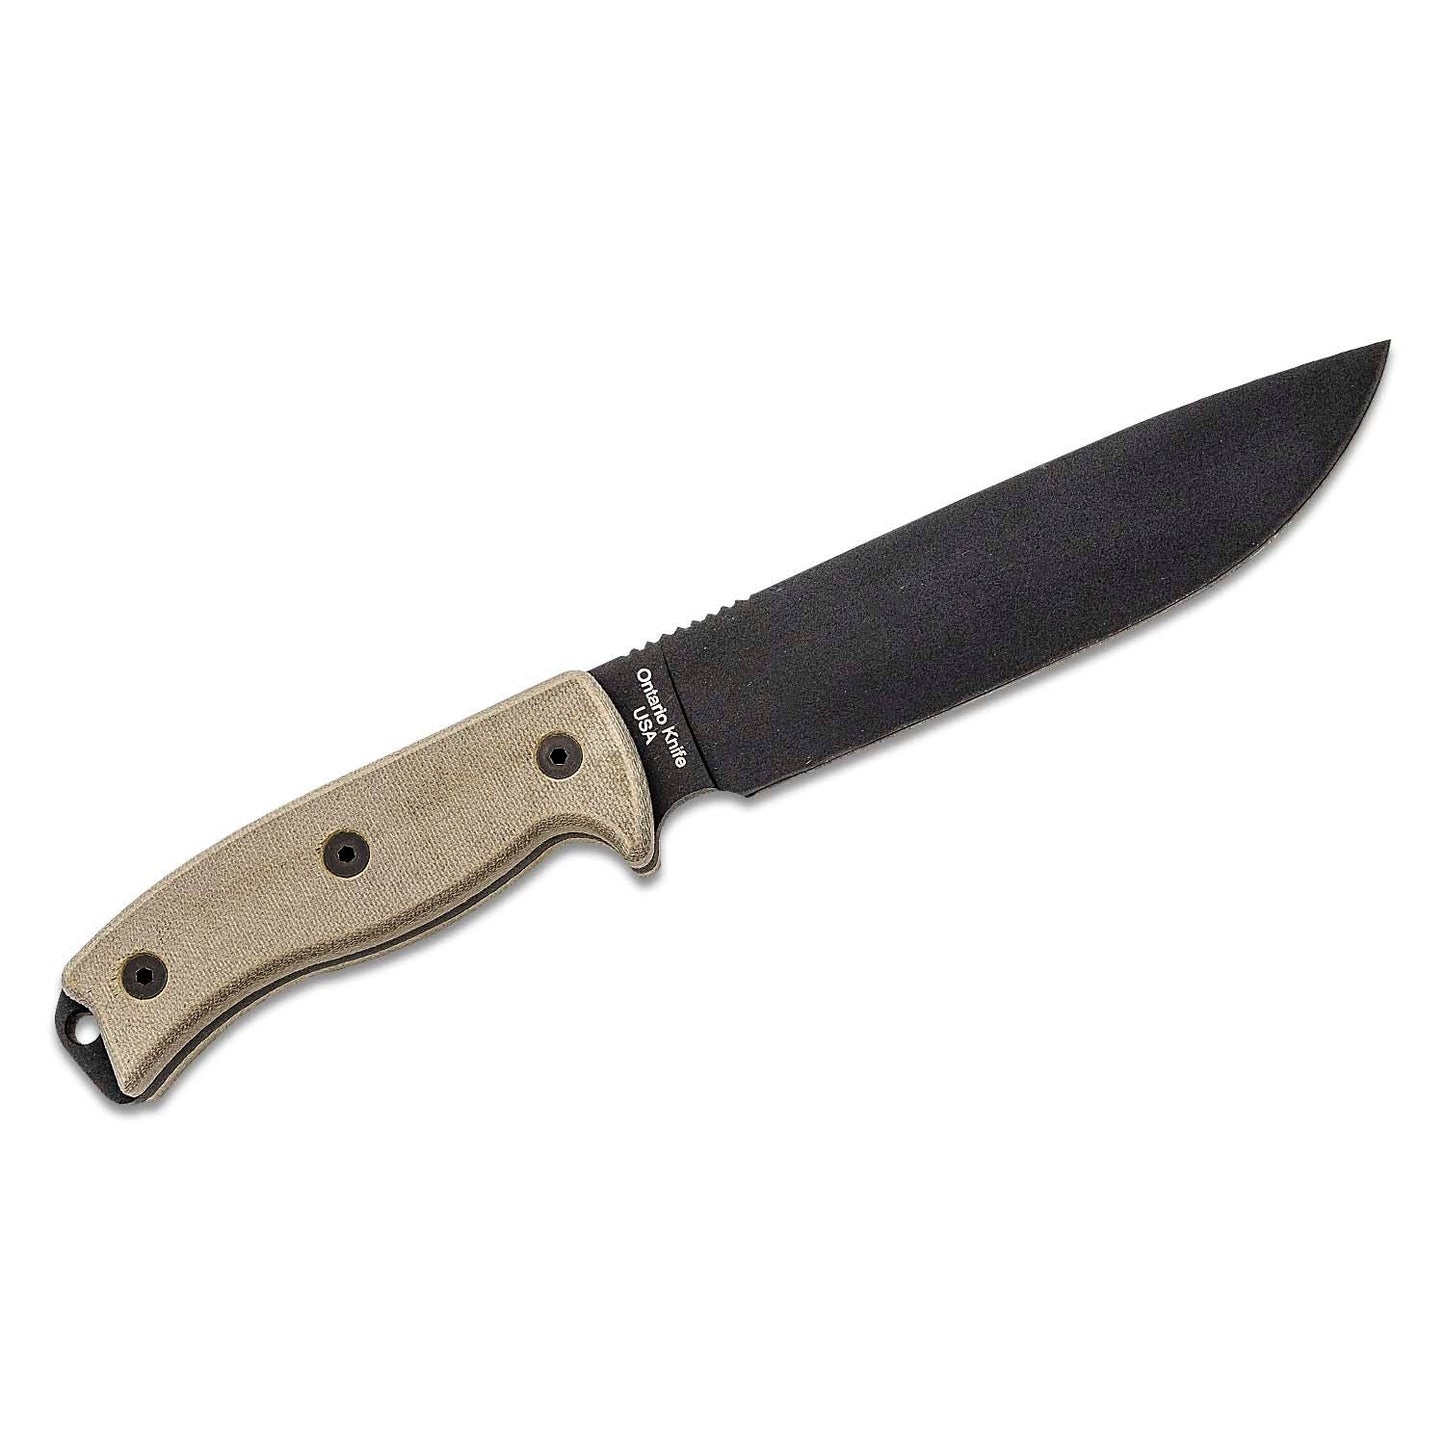 Ontario RAT-7 Survival Knife 7" Plain Blade, Micarta Handles, Nylon Sheath - 8668